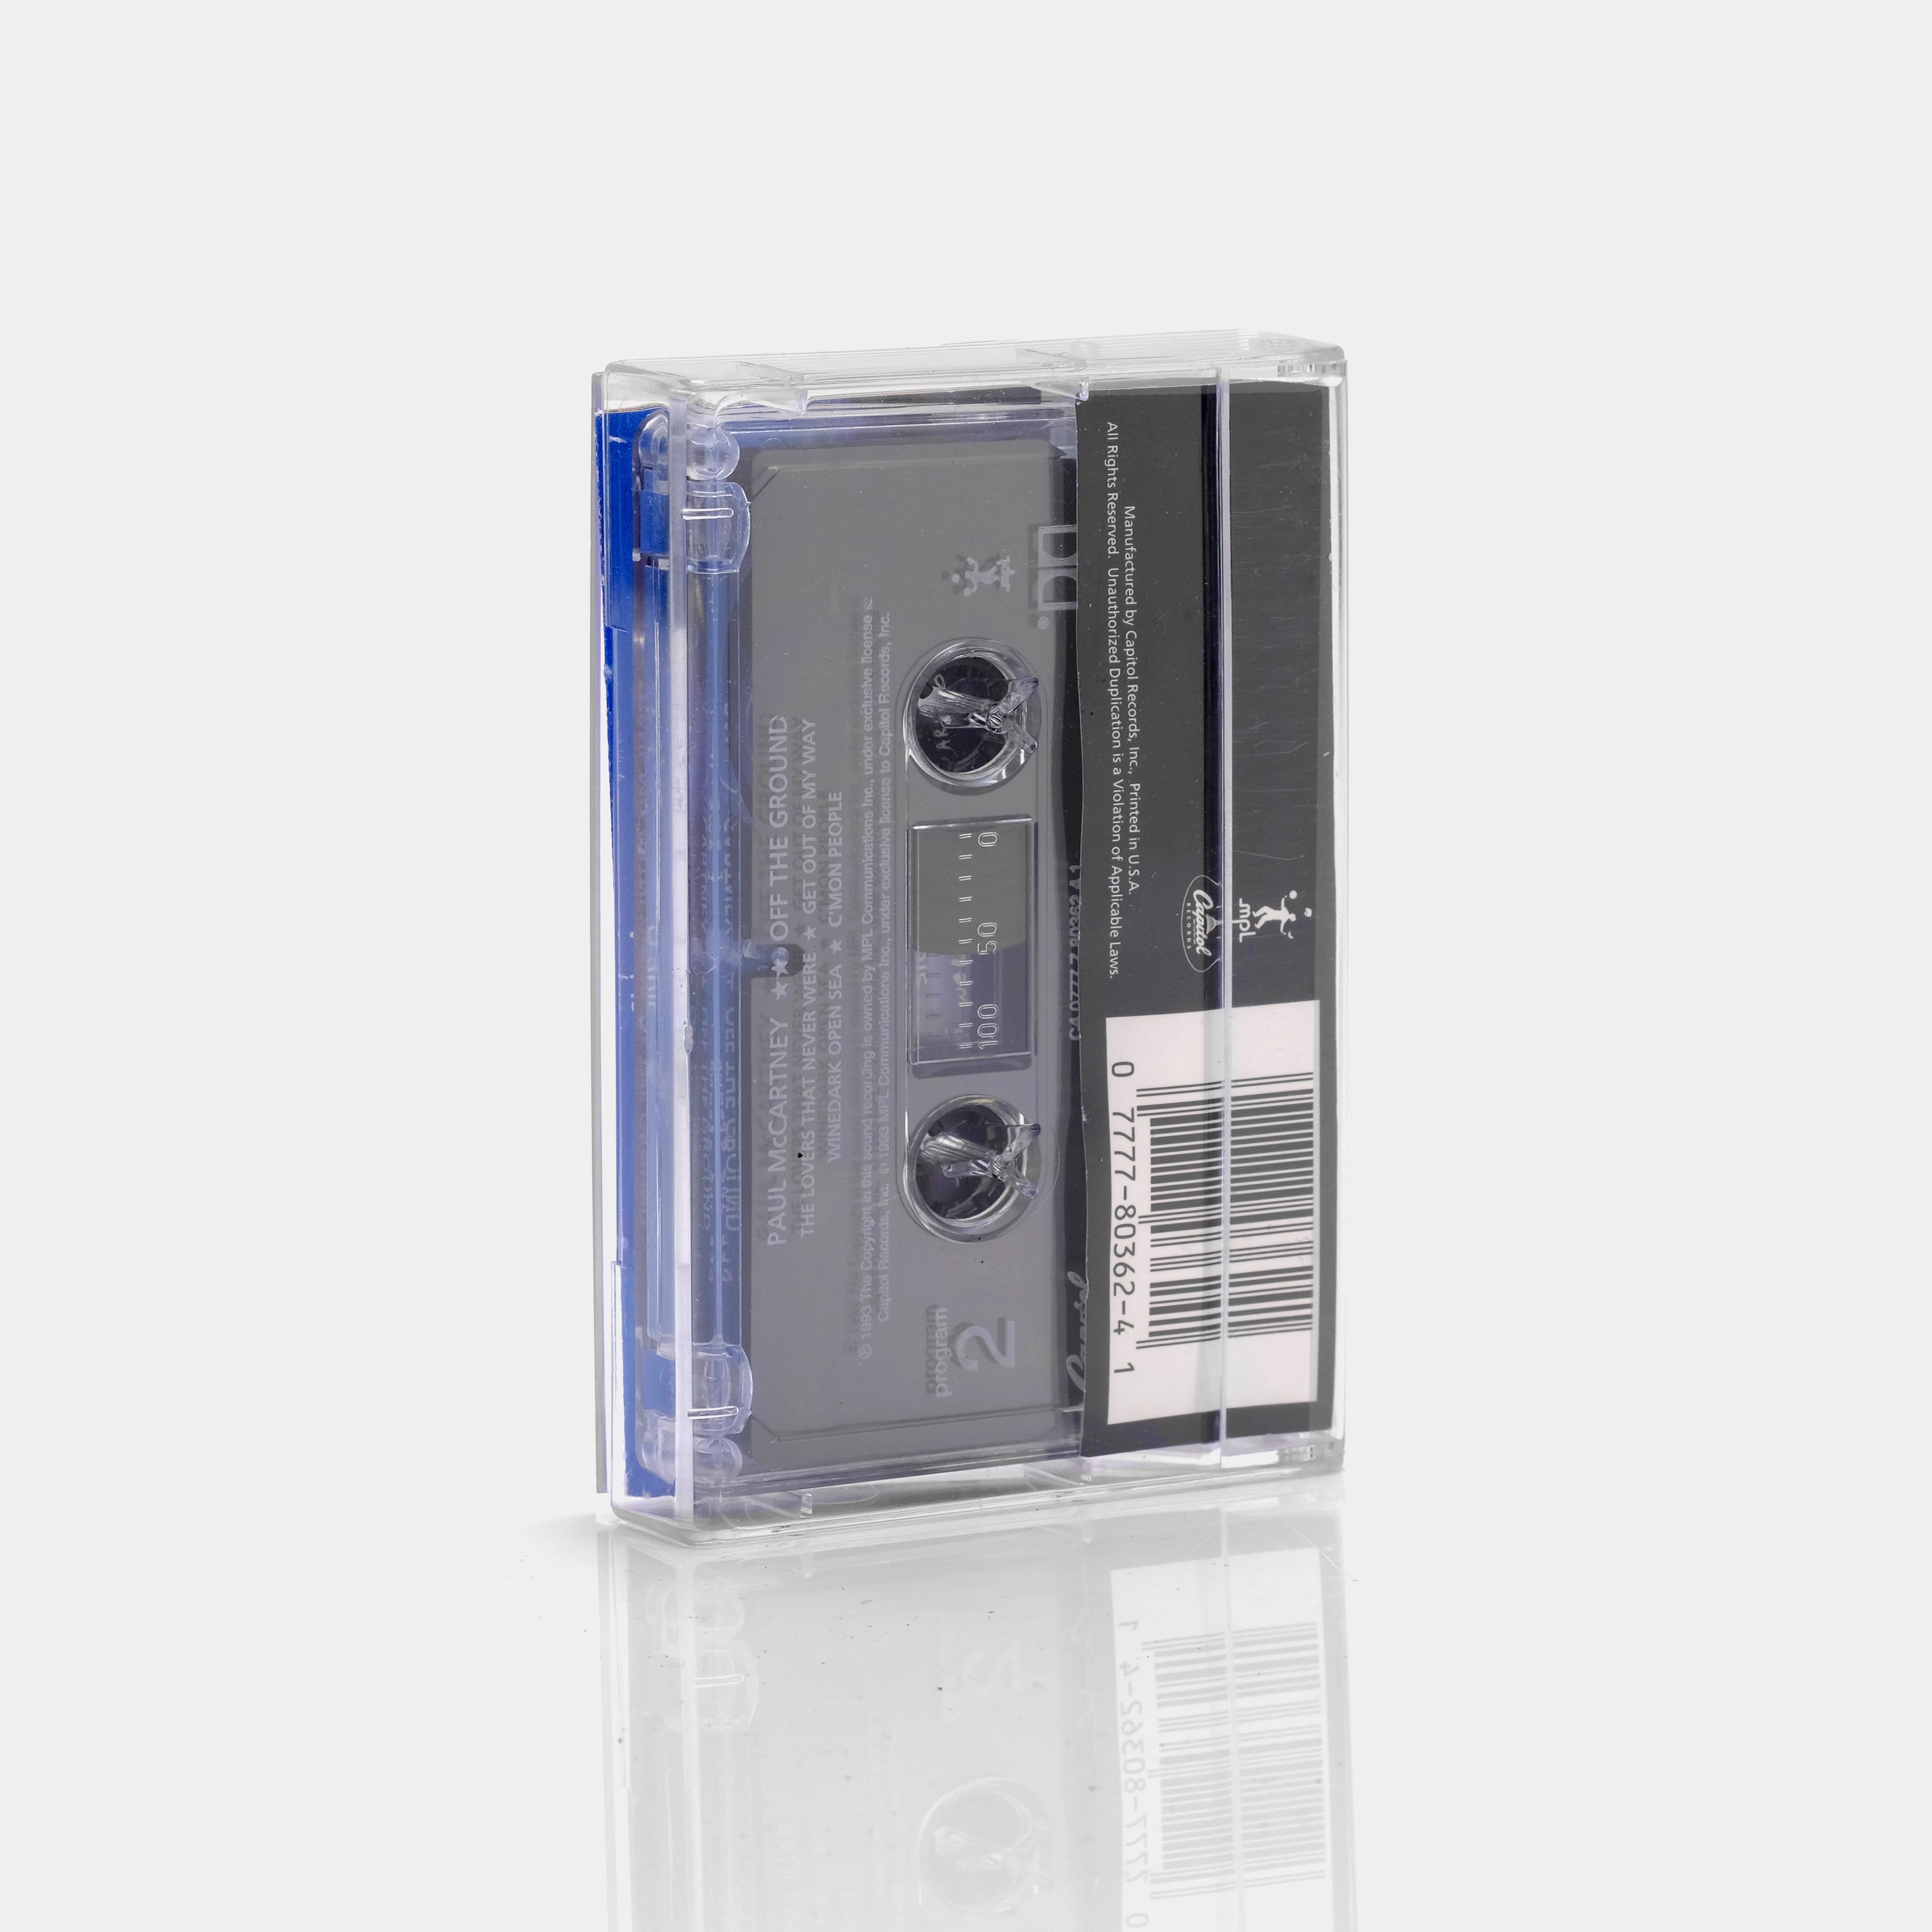 Paul McCartney - Off The Ground Cassette Tape